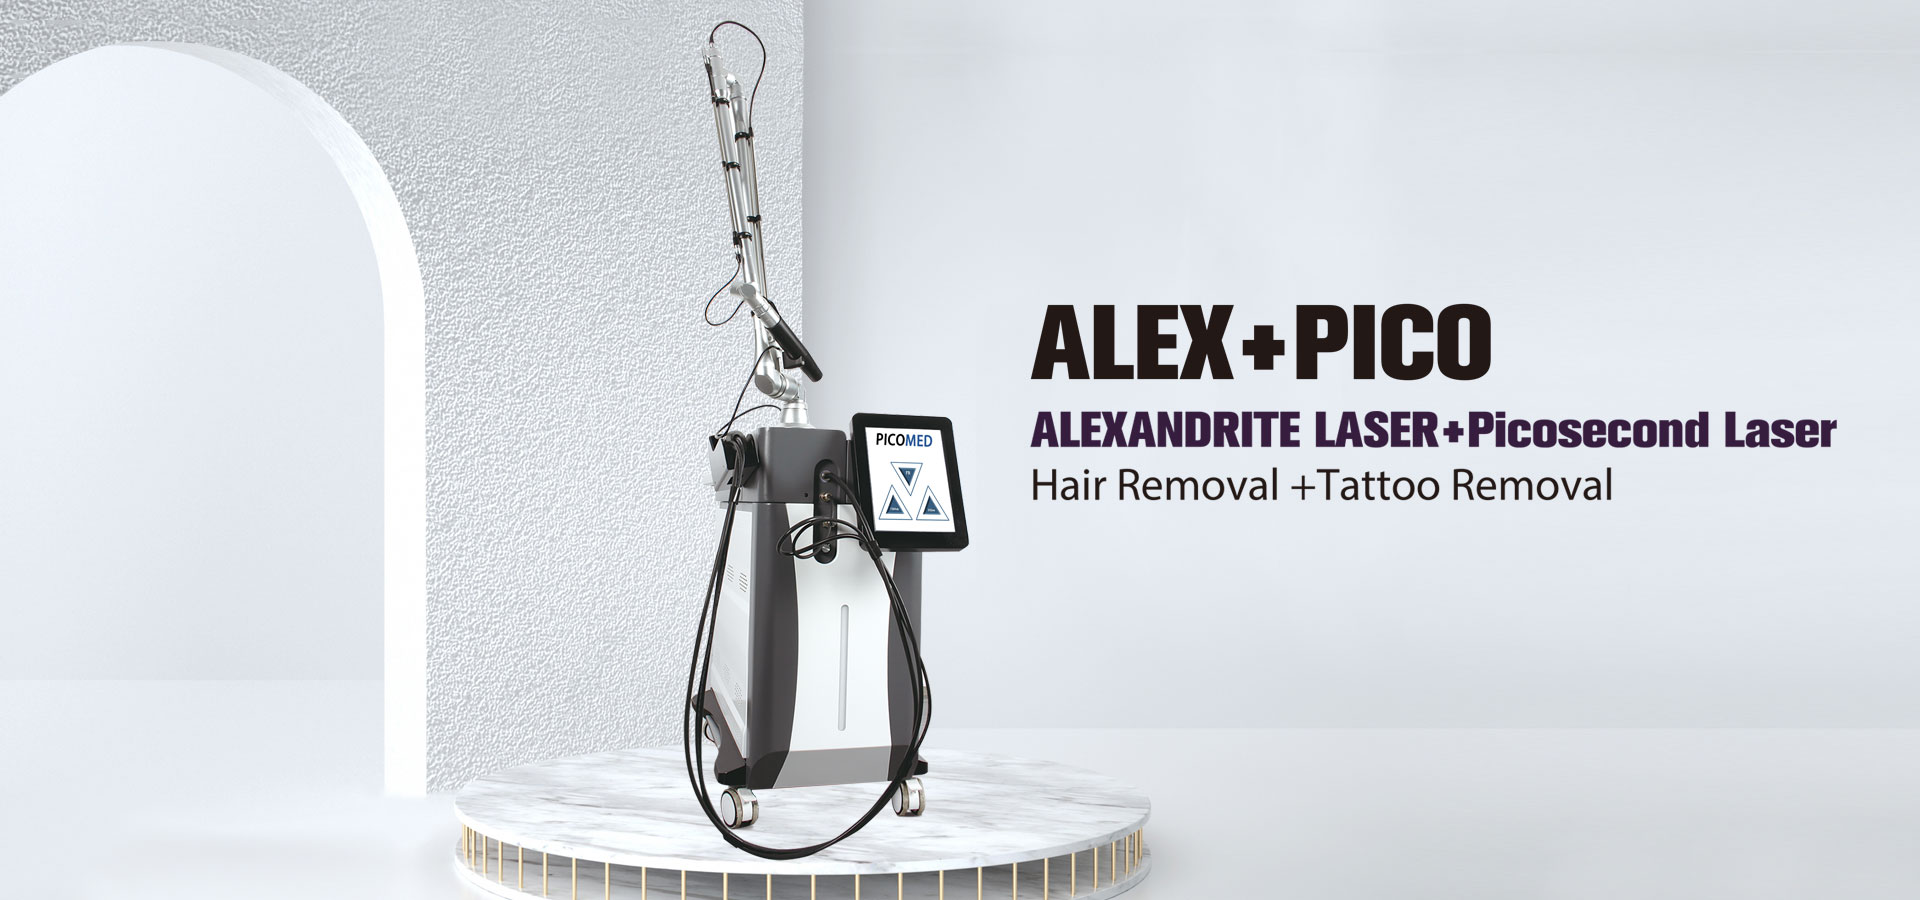 Alexandrit-Laserfabrik